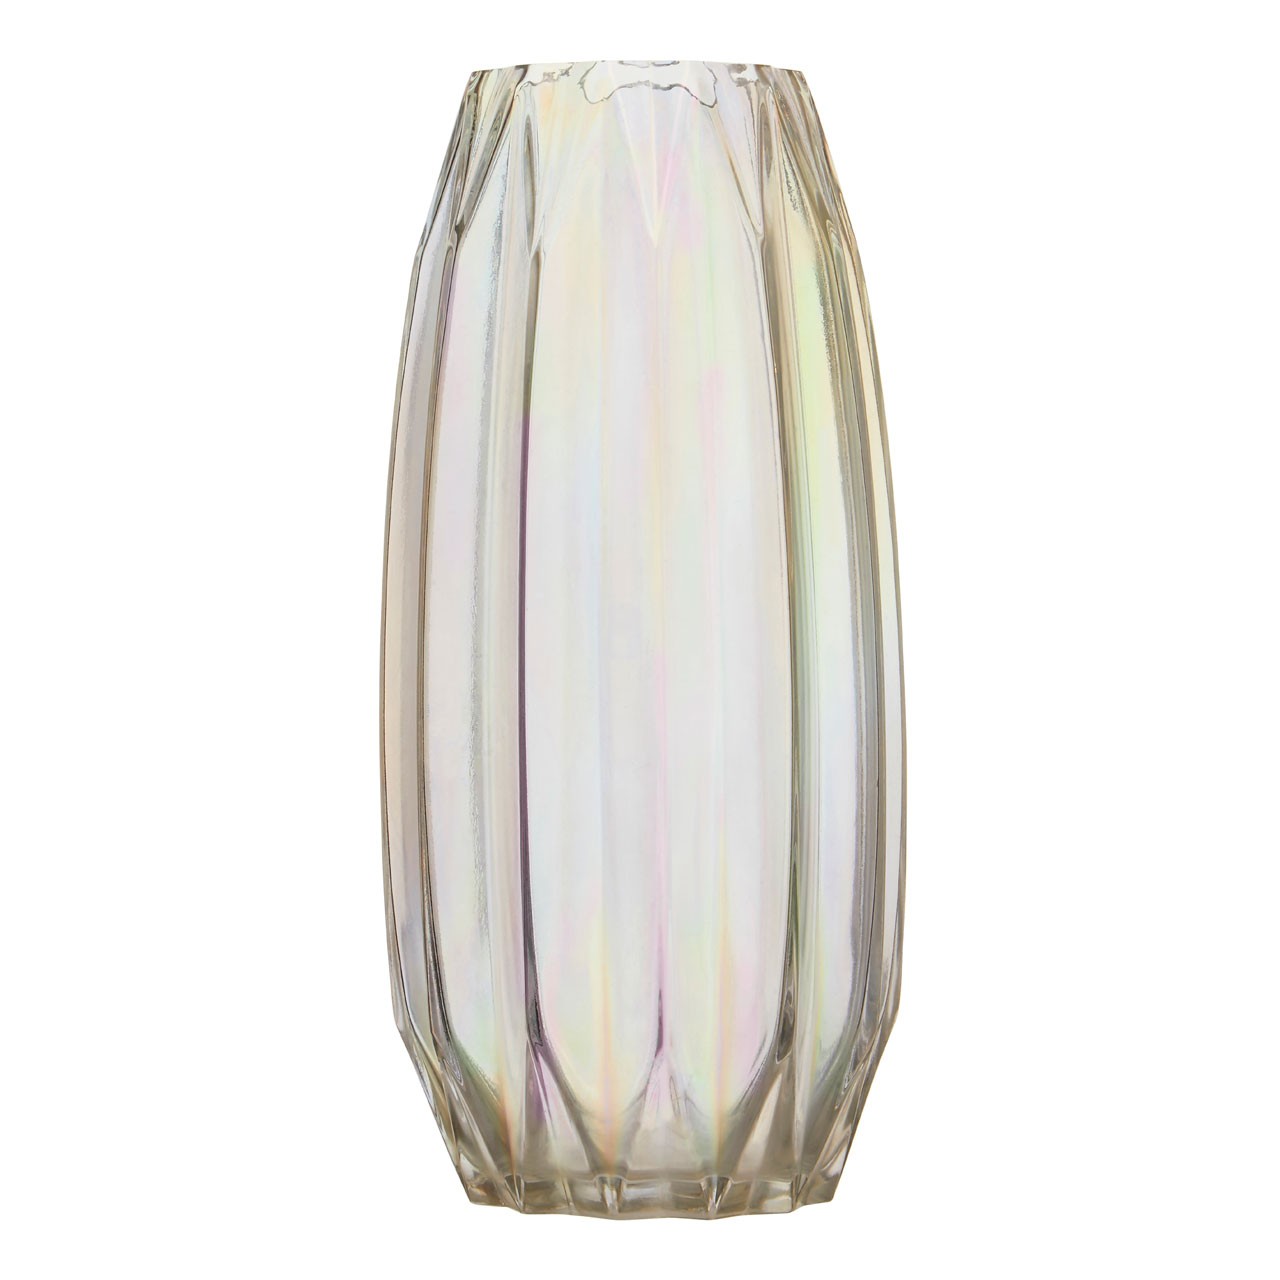 Petro Large Glass Vase With Iridescent Finish - Click Image to Close